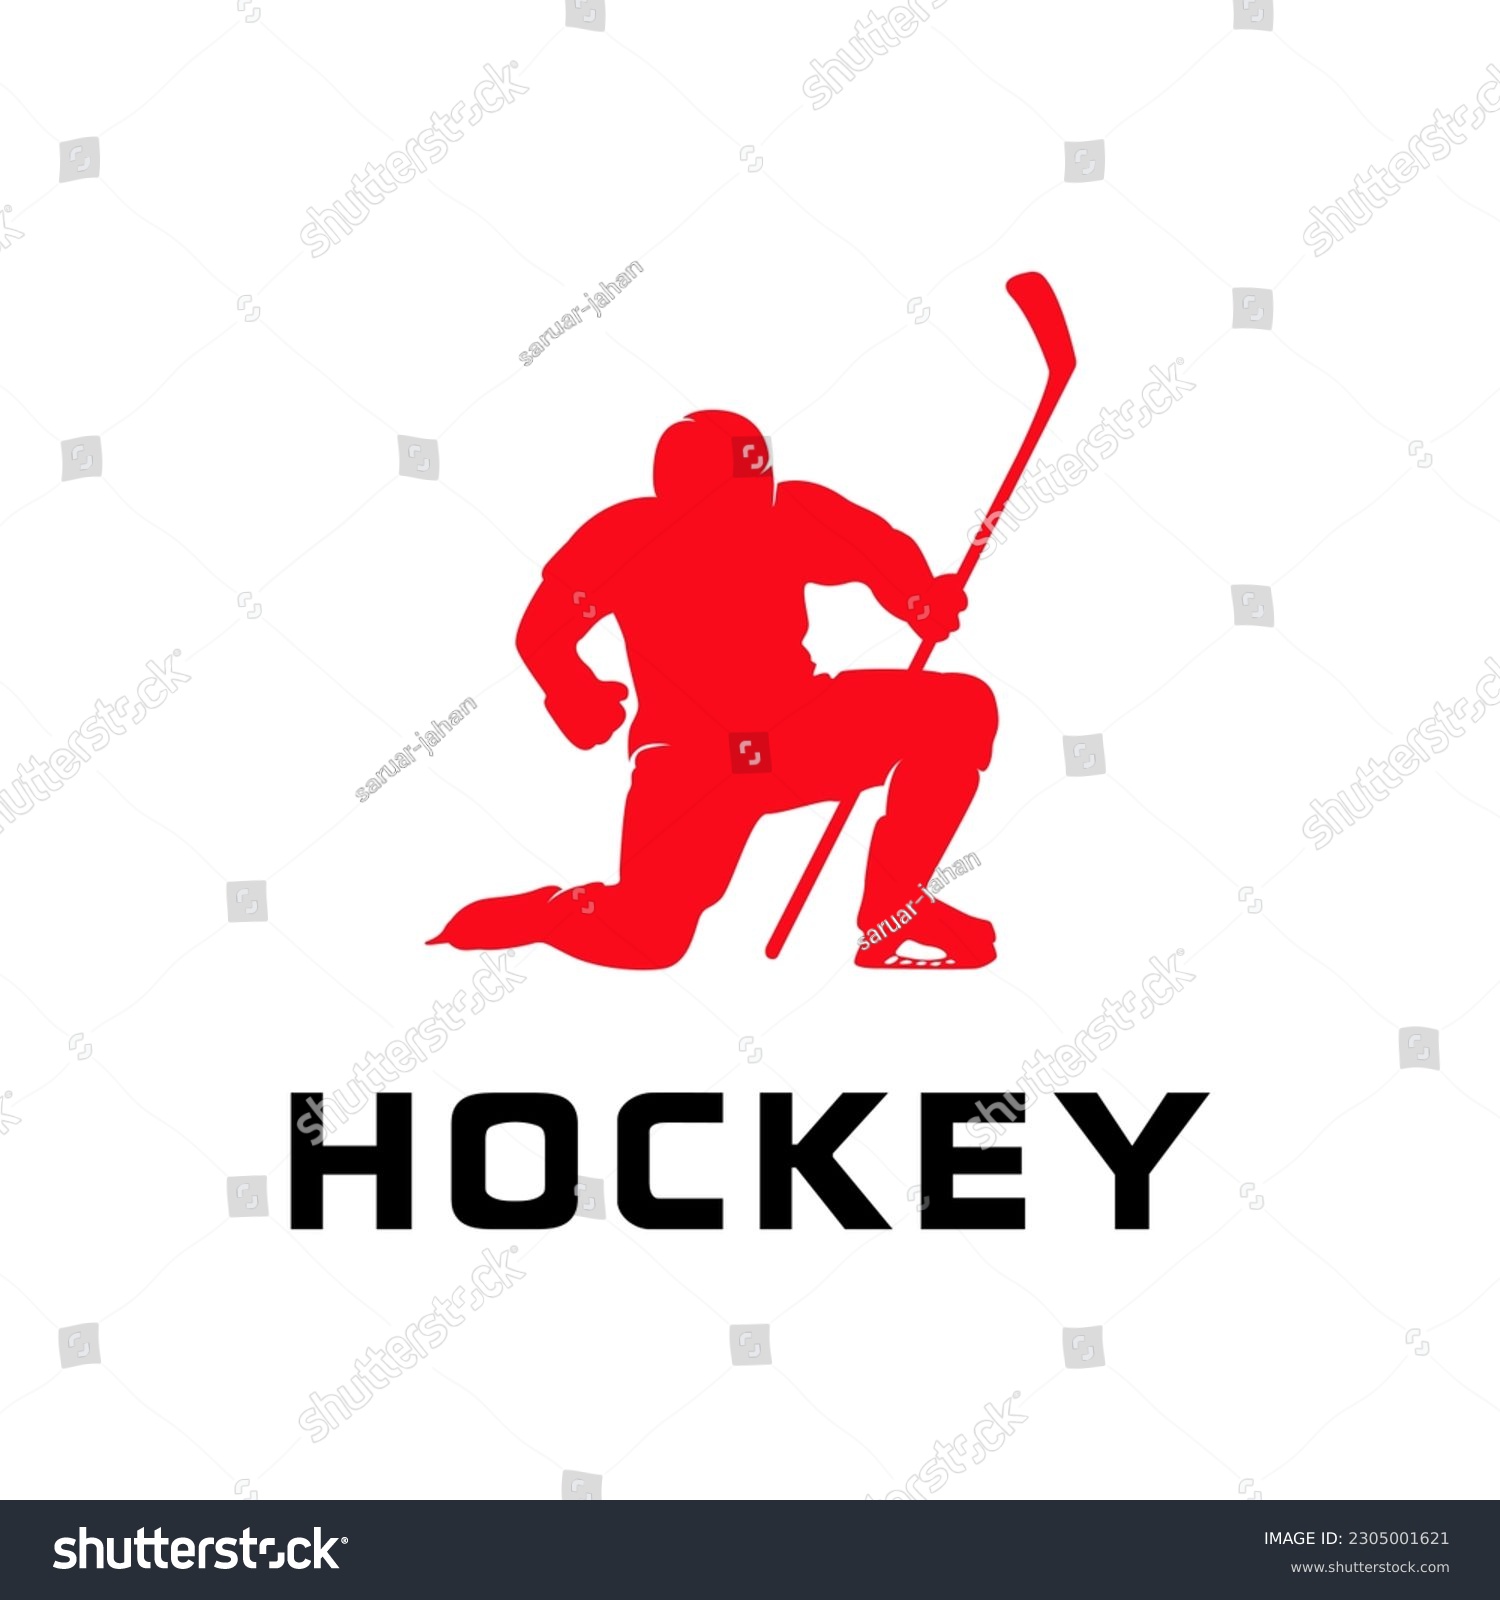 SVG of Hockey company logo and icon design svg